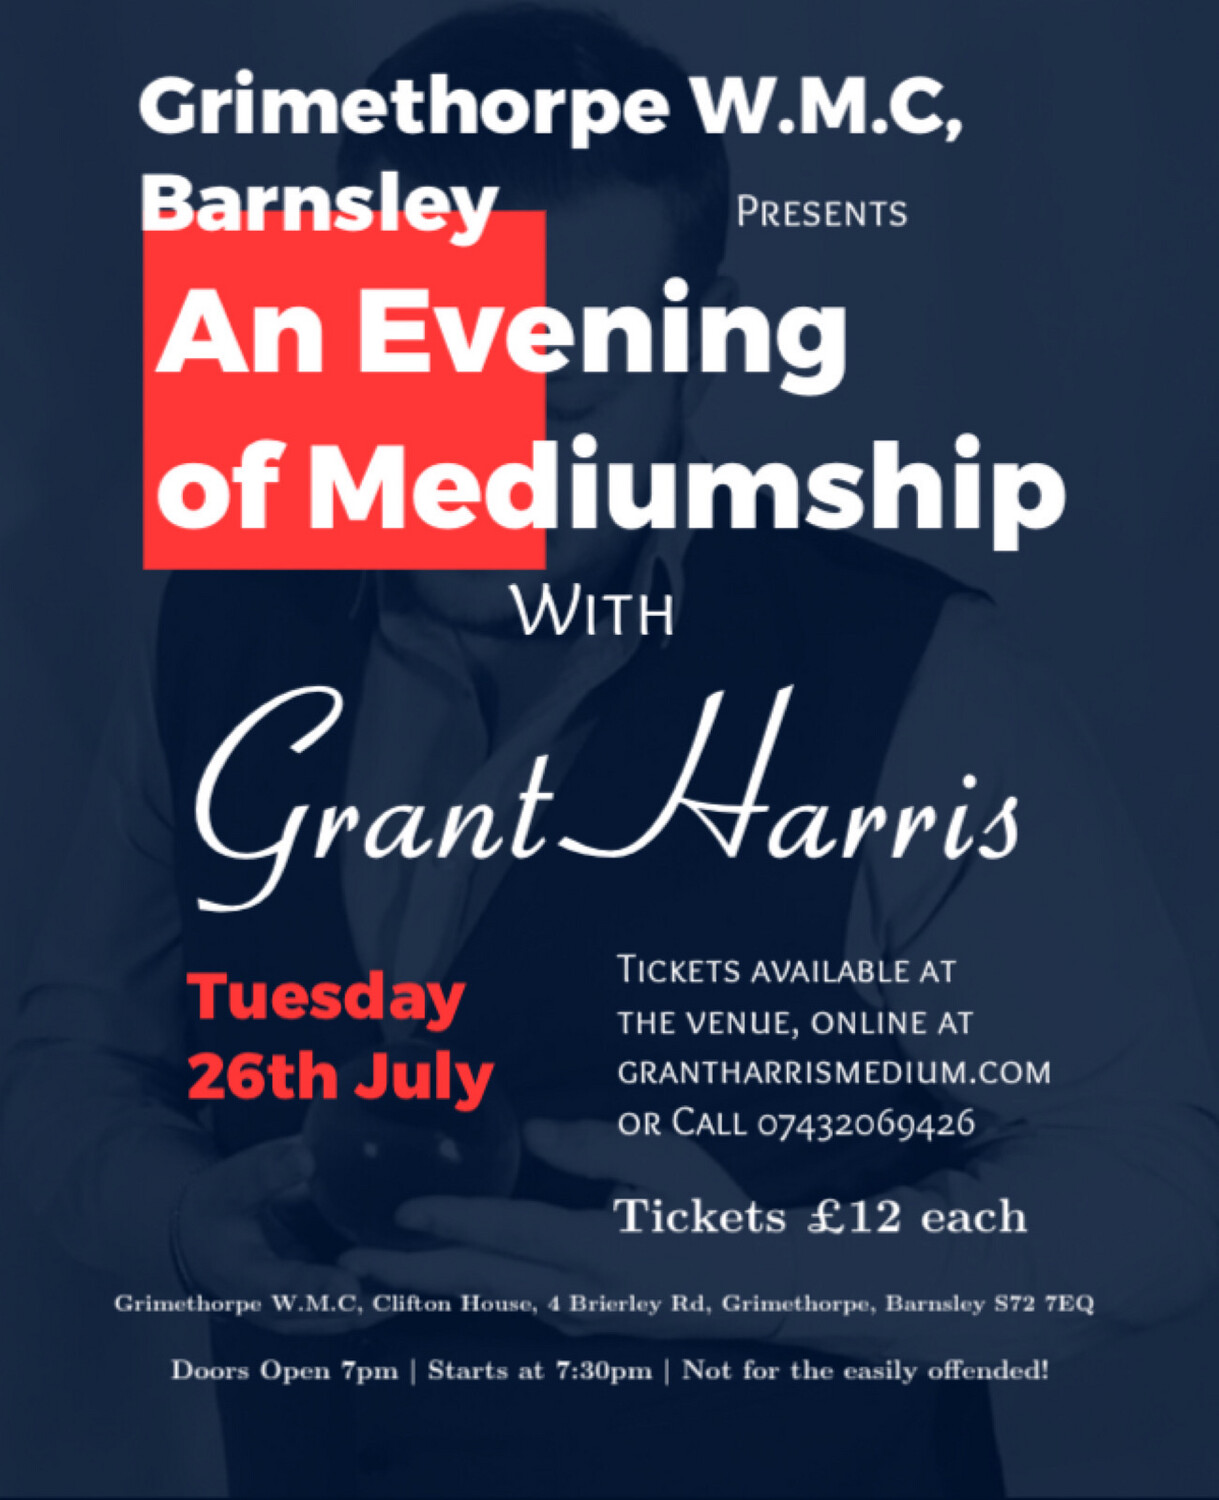 Evening of Mediumship, Grimethorpe WMC, Barnsley, Tues 26th July 2022